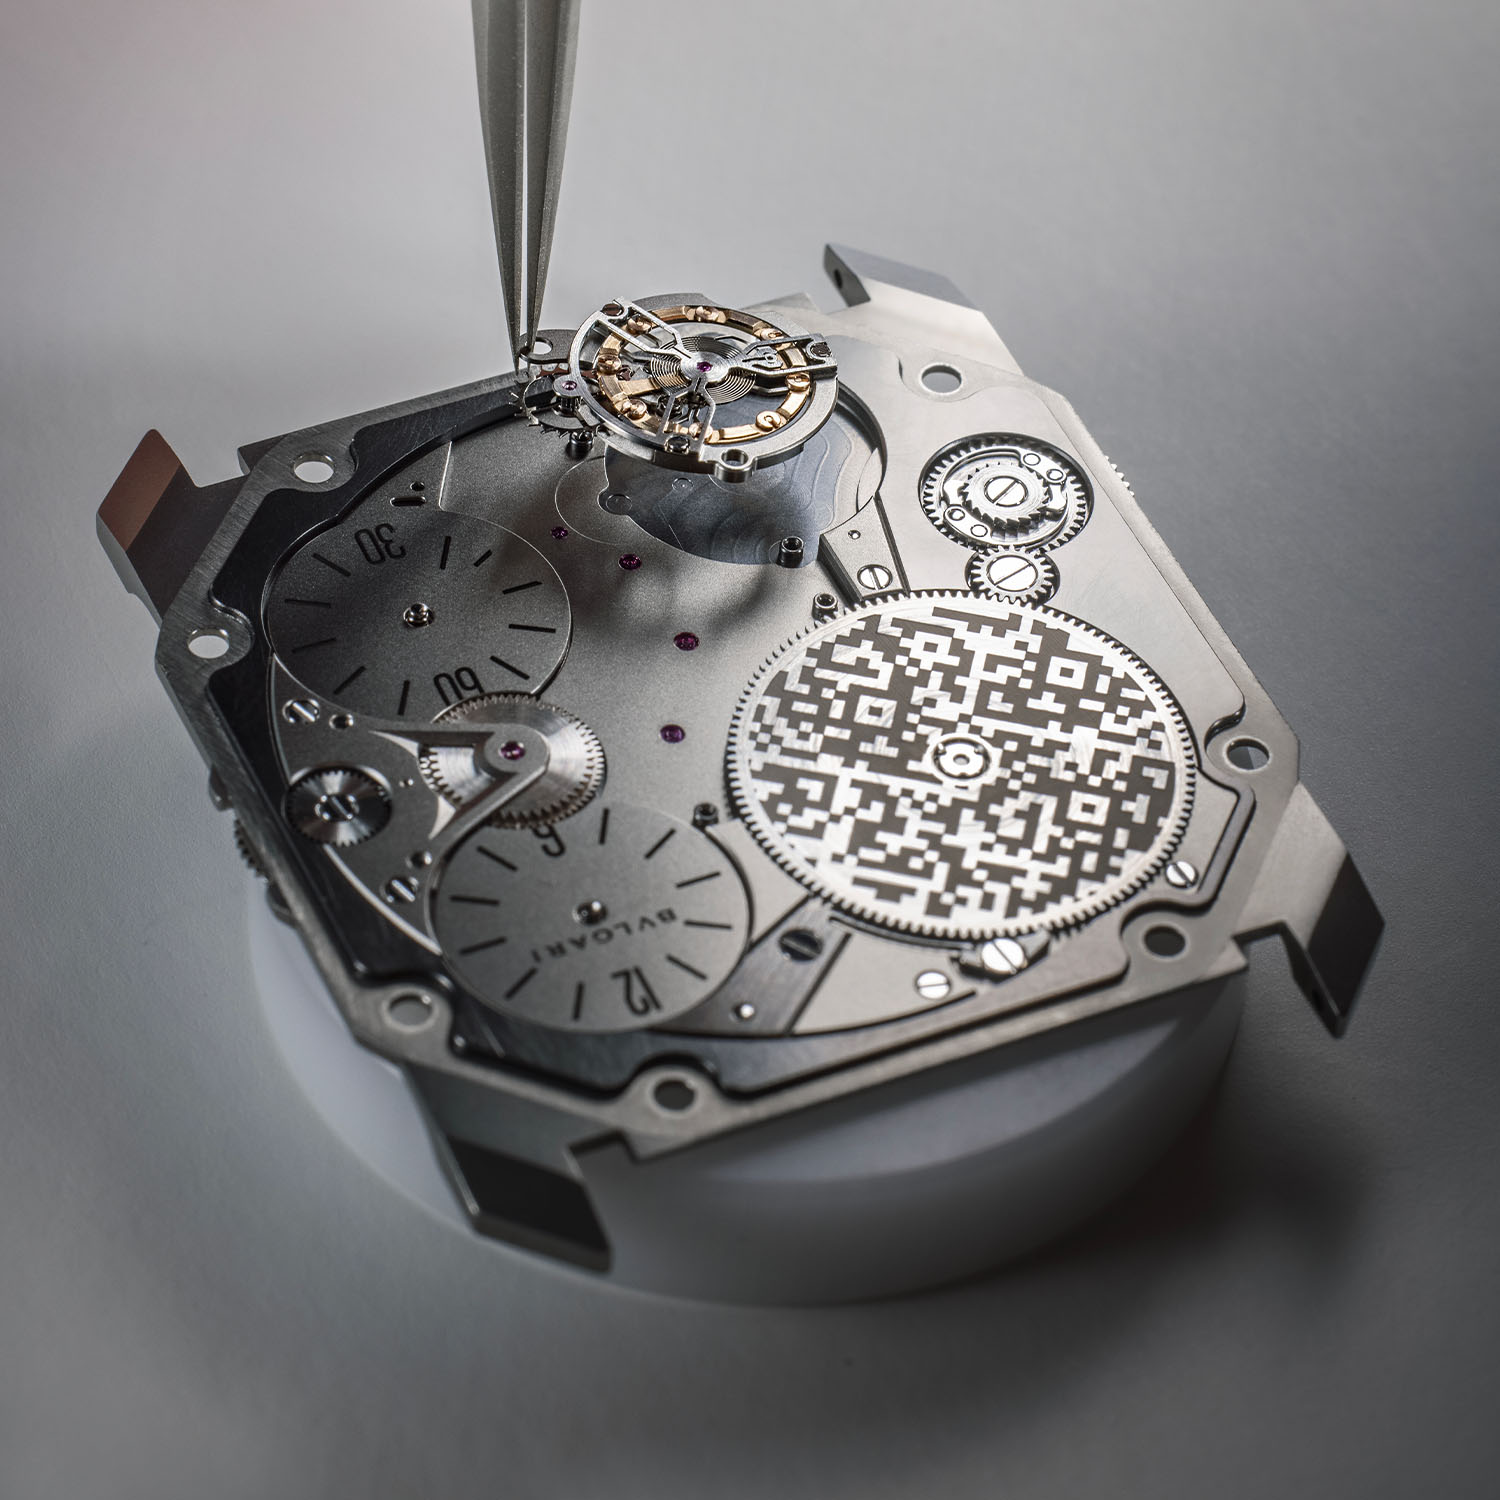 Bulgari Octo Finissimo Ultra - World's Thinnest Mechanical Watch